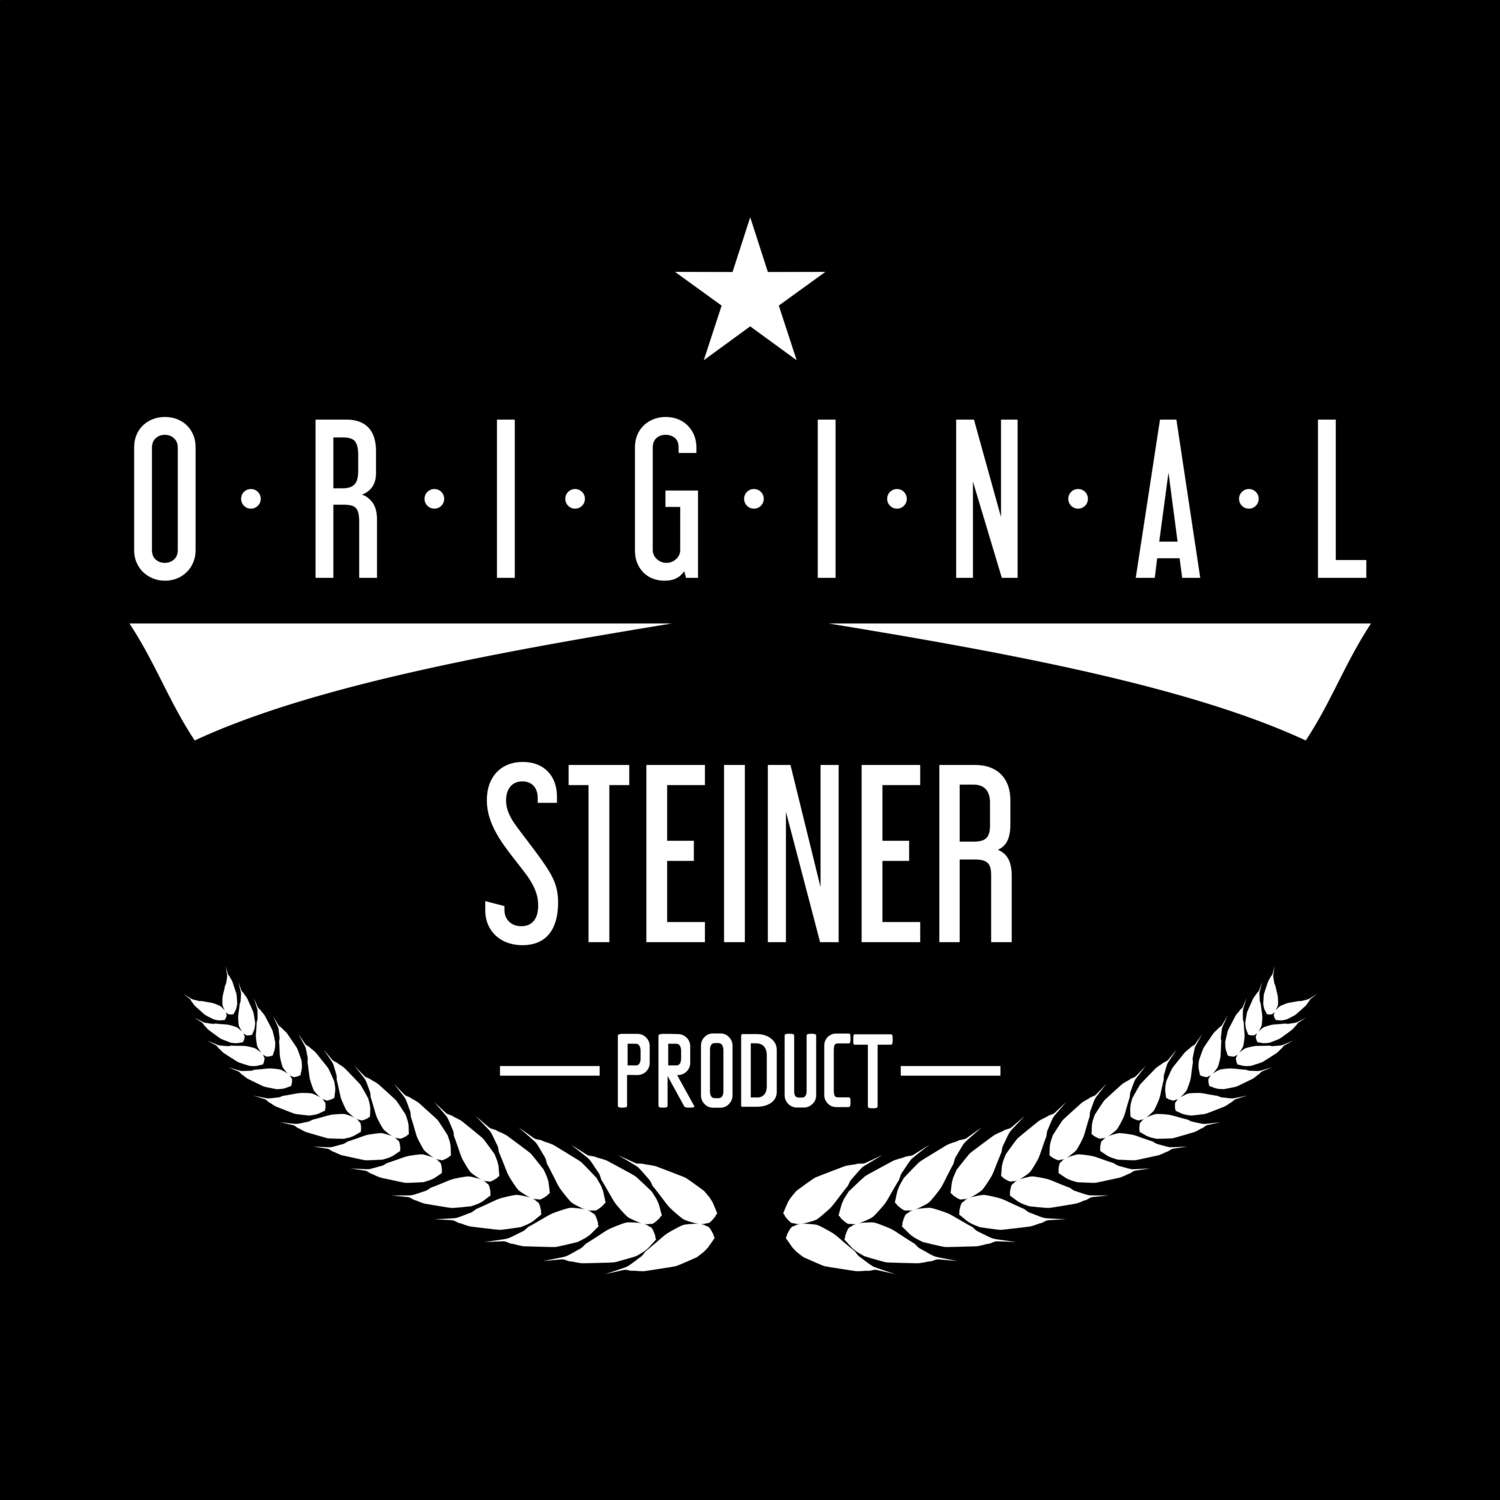 Steiner T-Shirt »Original Product«